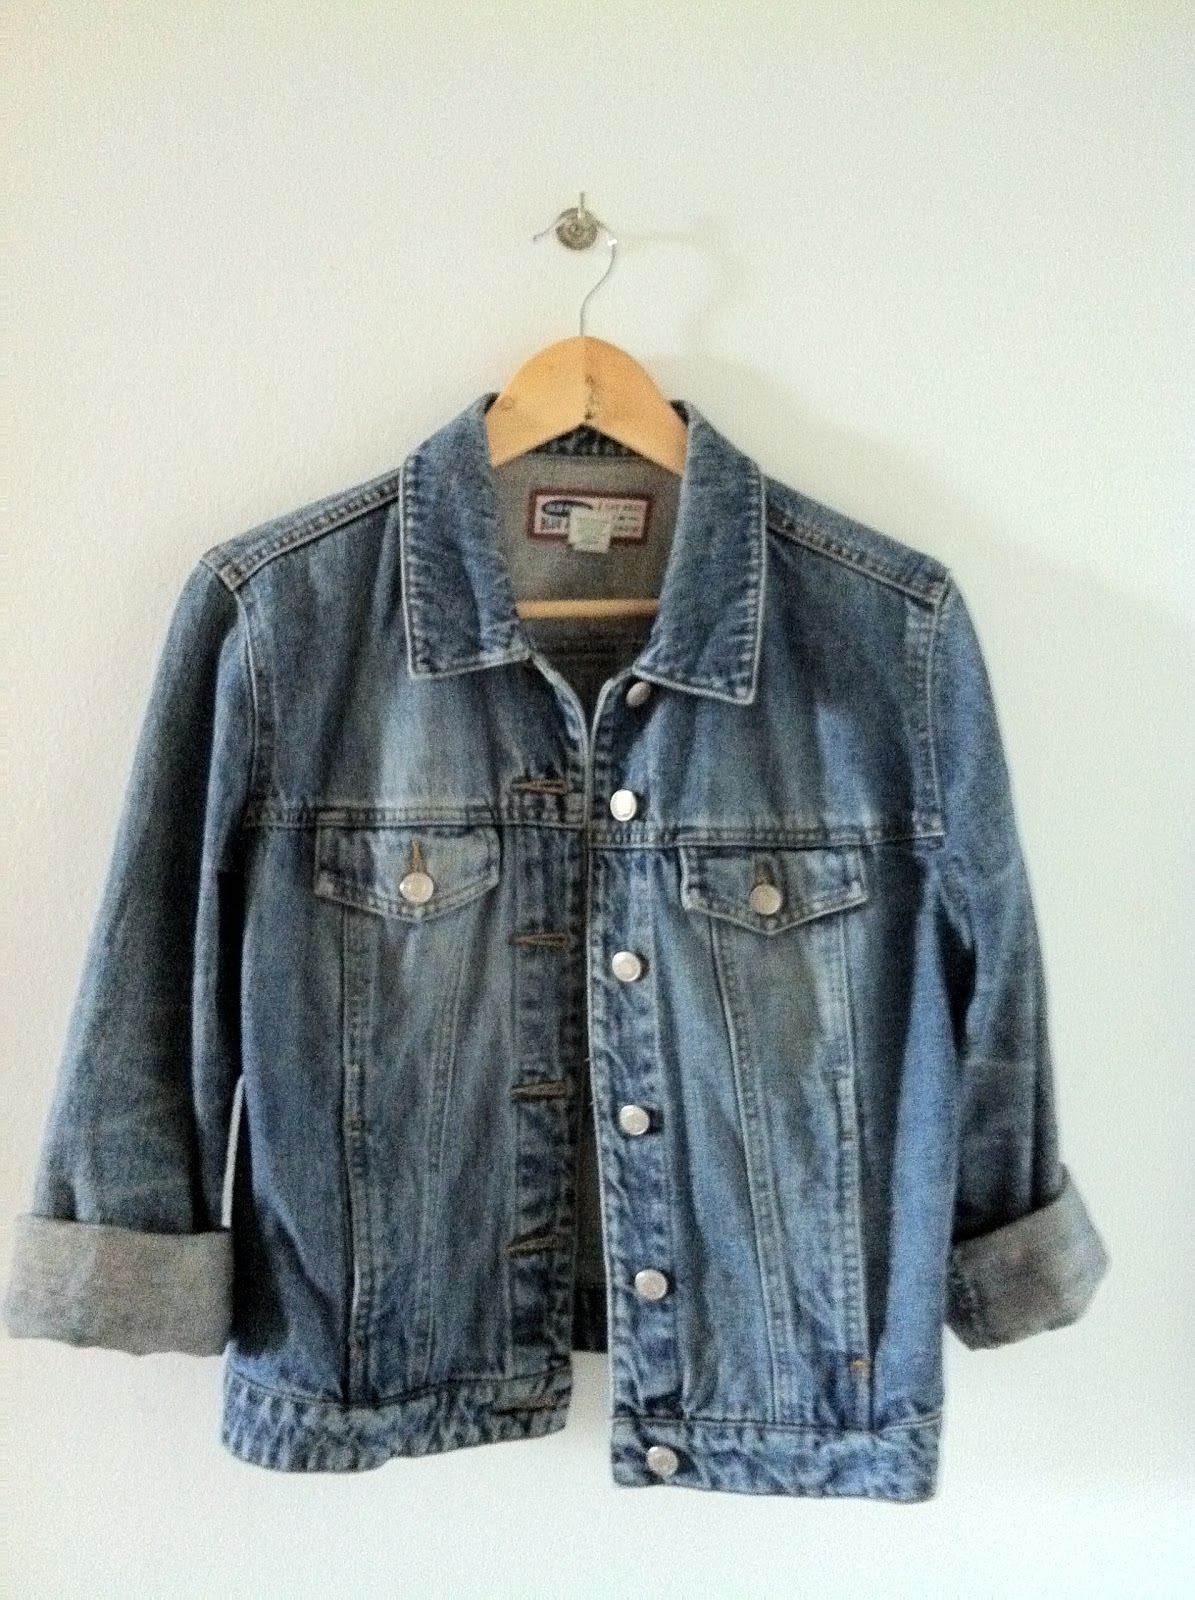 Fashion Atelier: Old Navy vintage jacket!